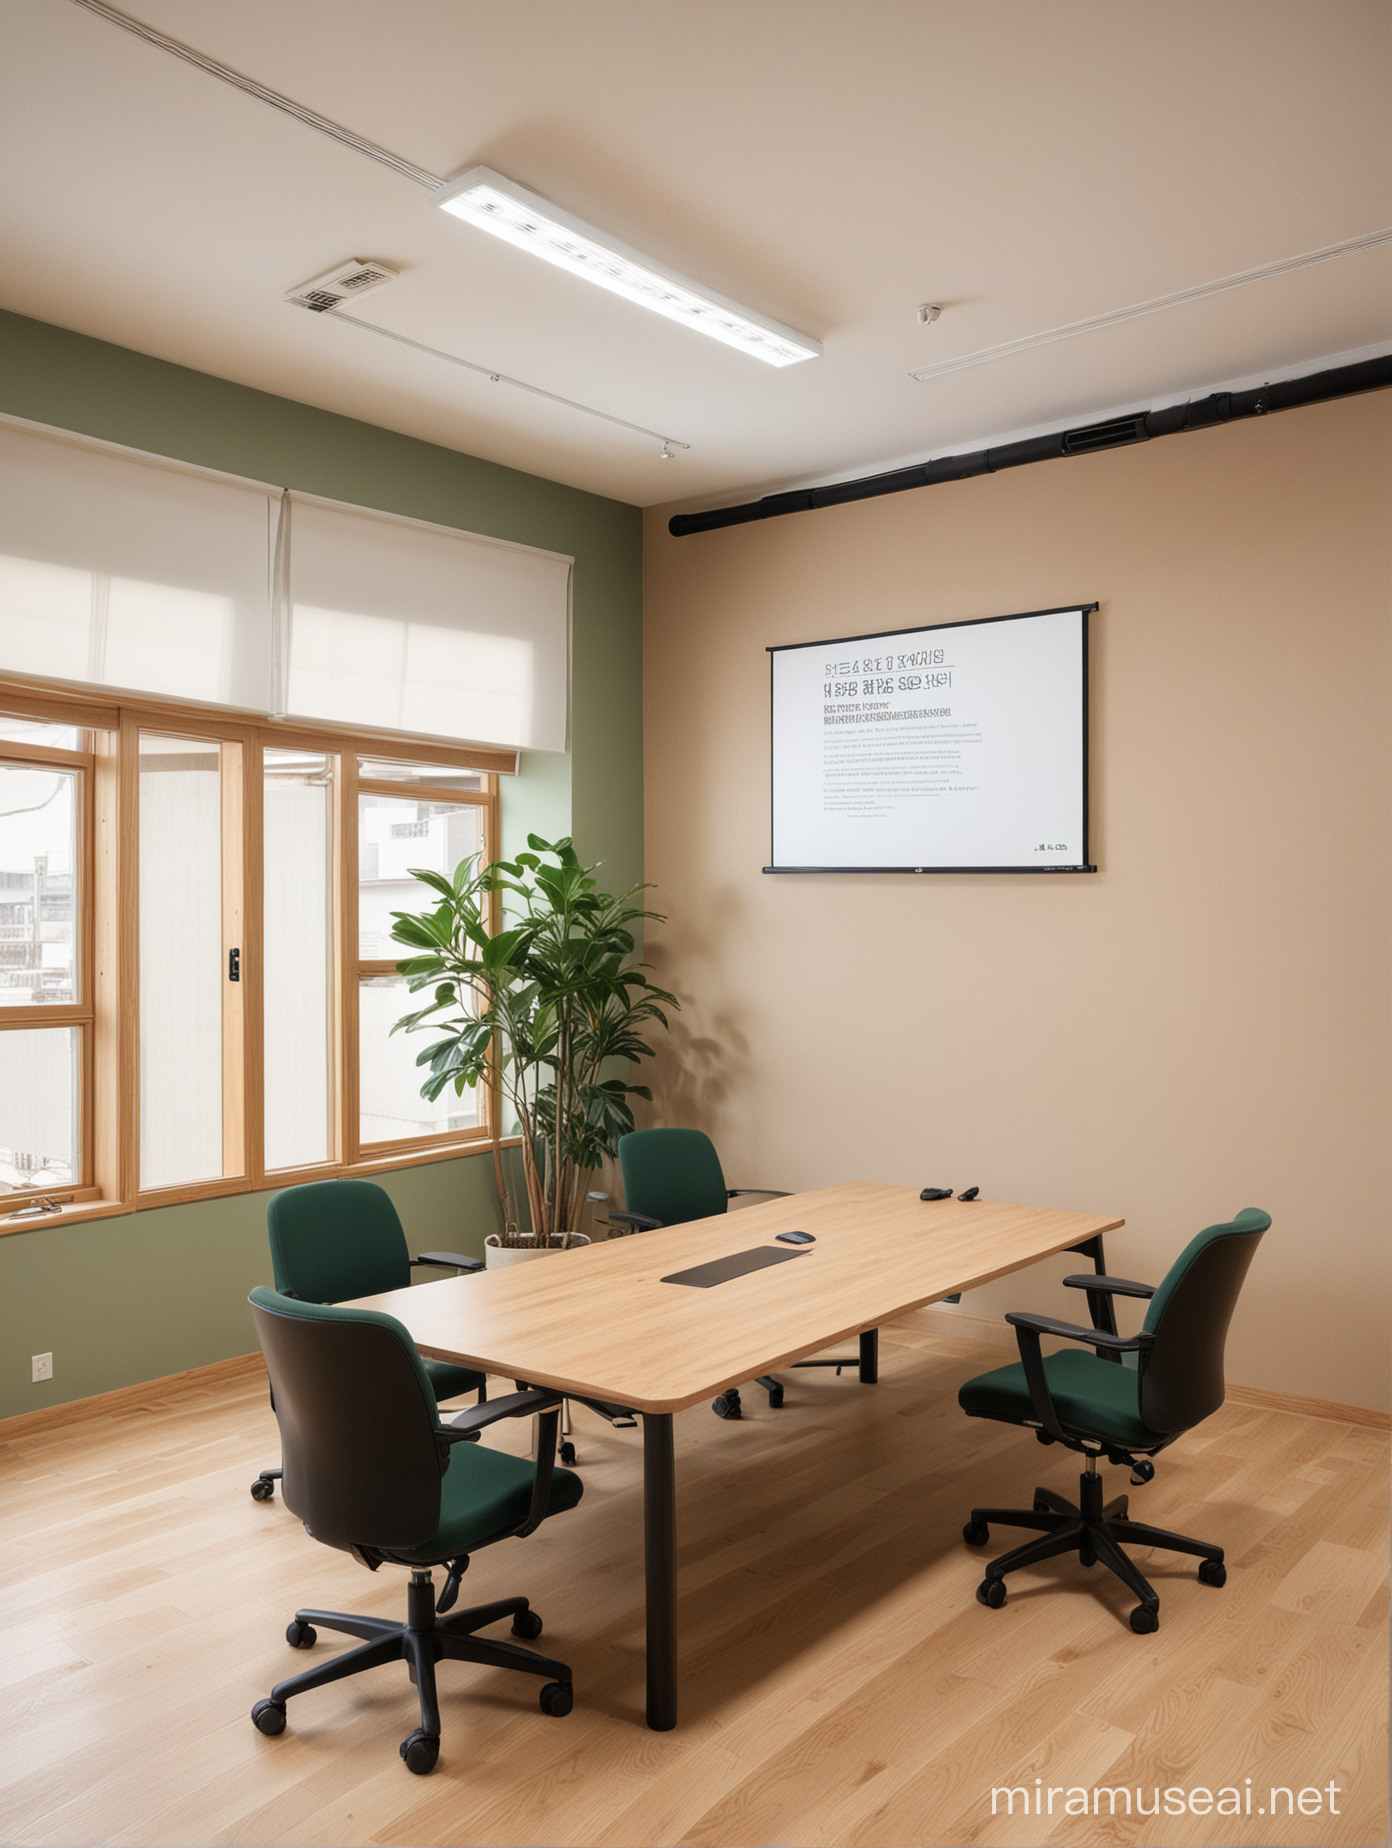 EduFlex Study Rooms Wide Workspace with NoiseCanceling Features